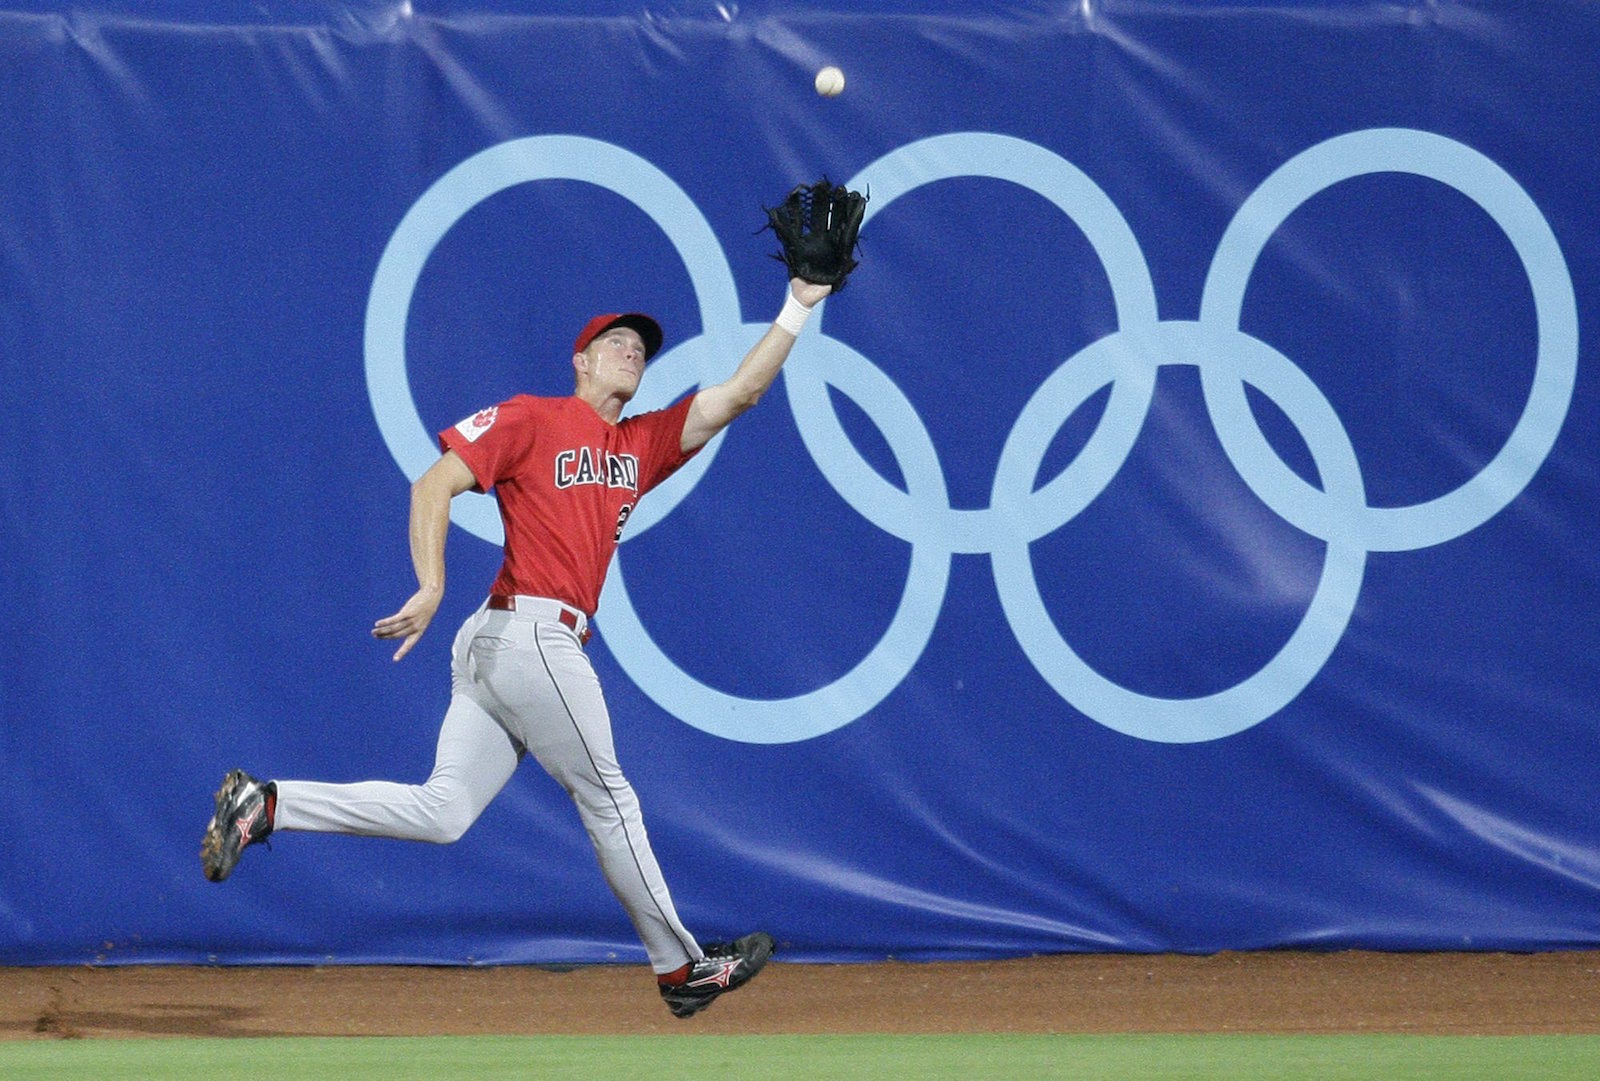 Baseball to return to Olympic program in 2020